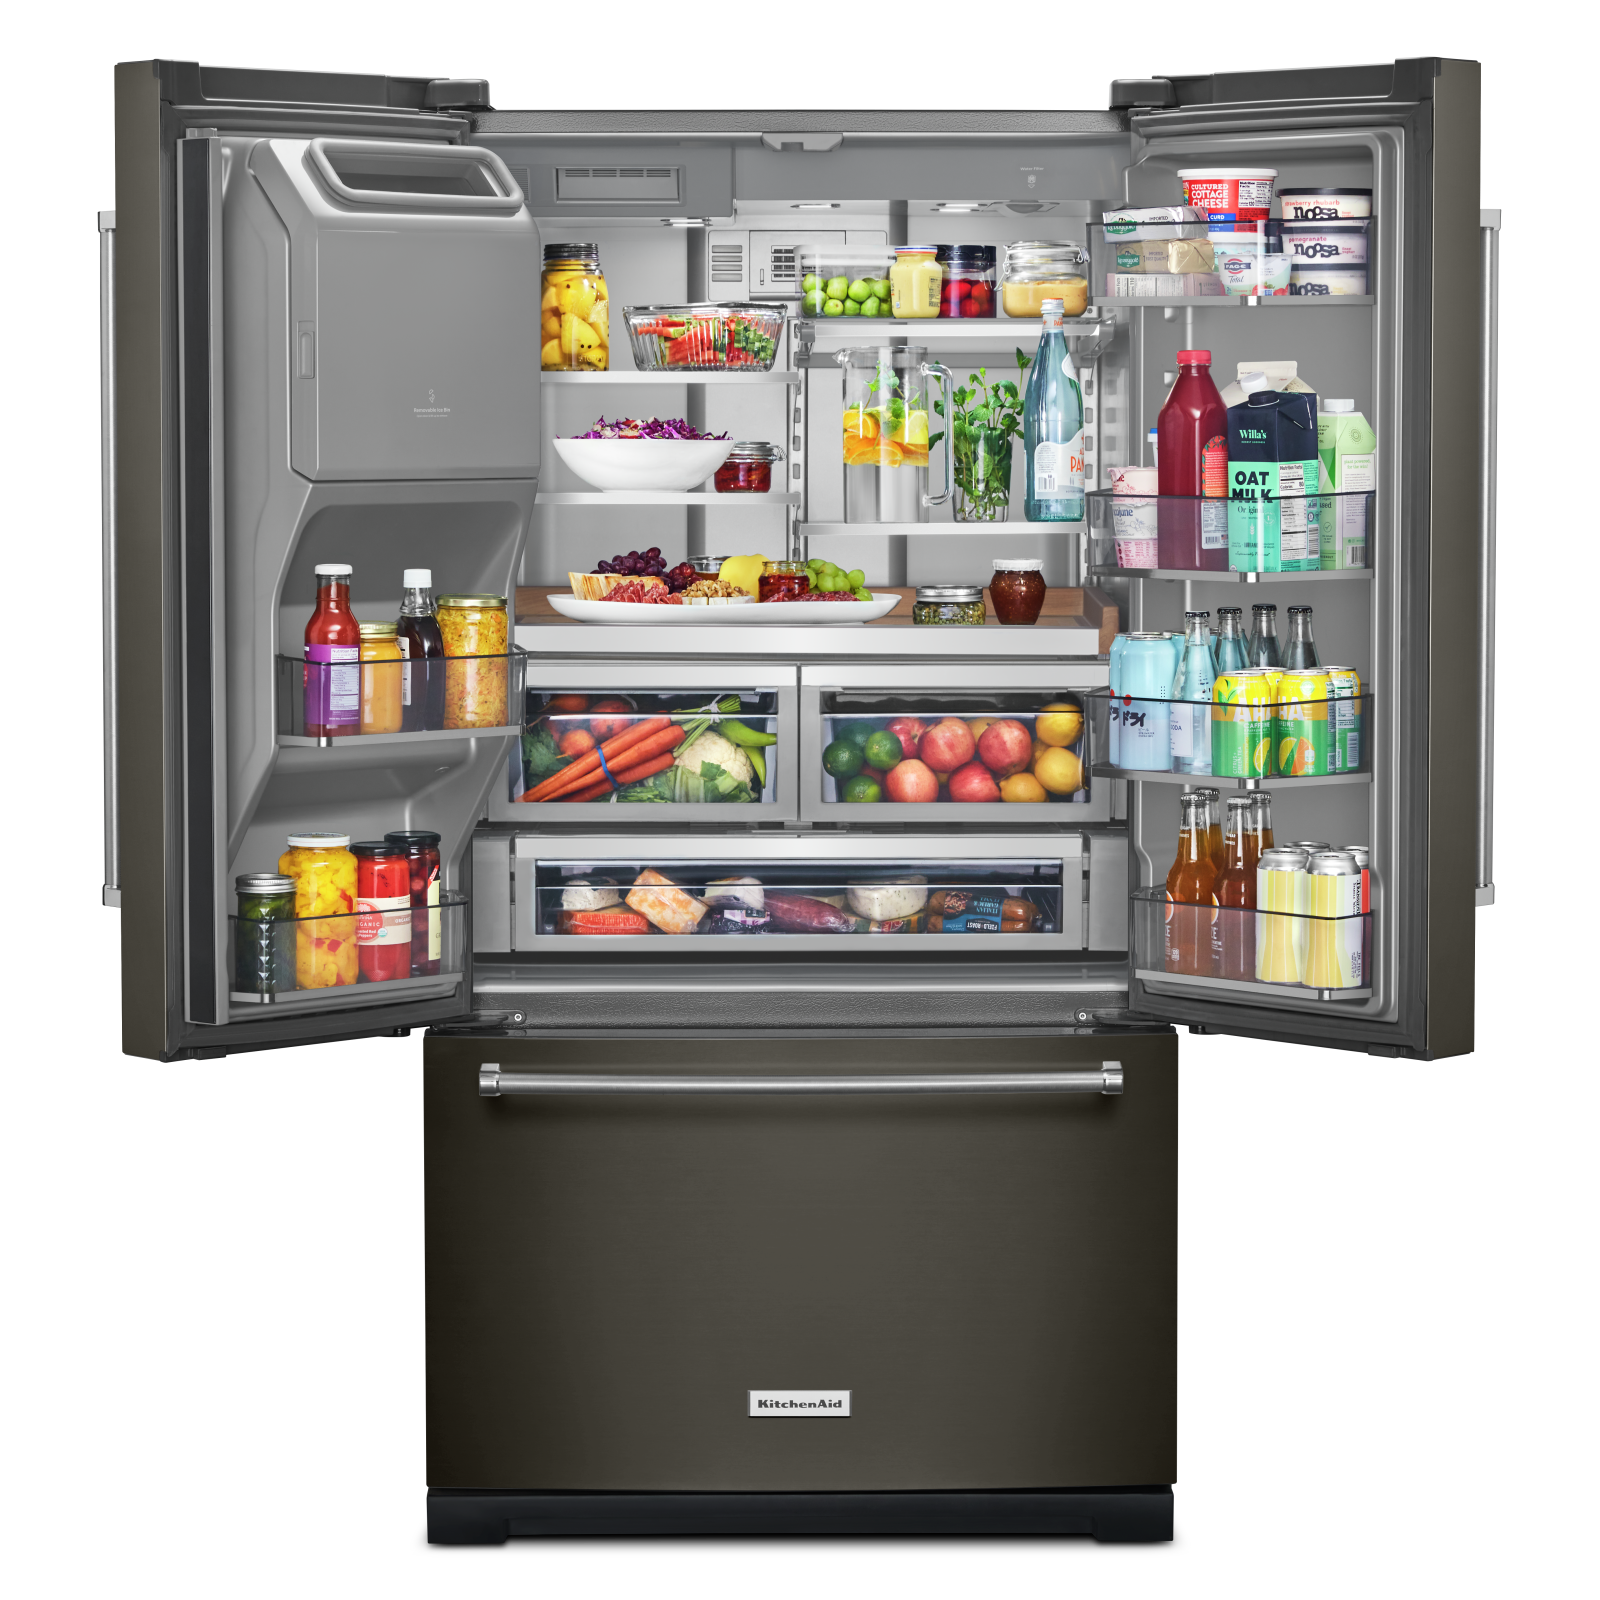 KitchenAid - 35.9375 Inch 27 cu. ft French Door Refrigerator in Black Stainless - KRFF577KBS